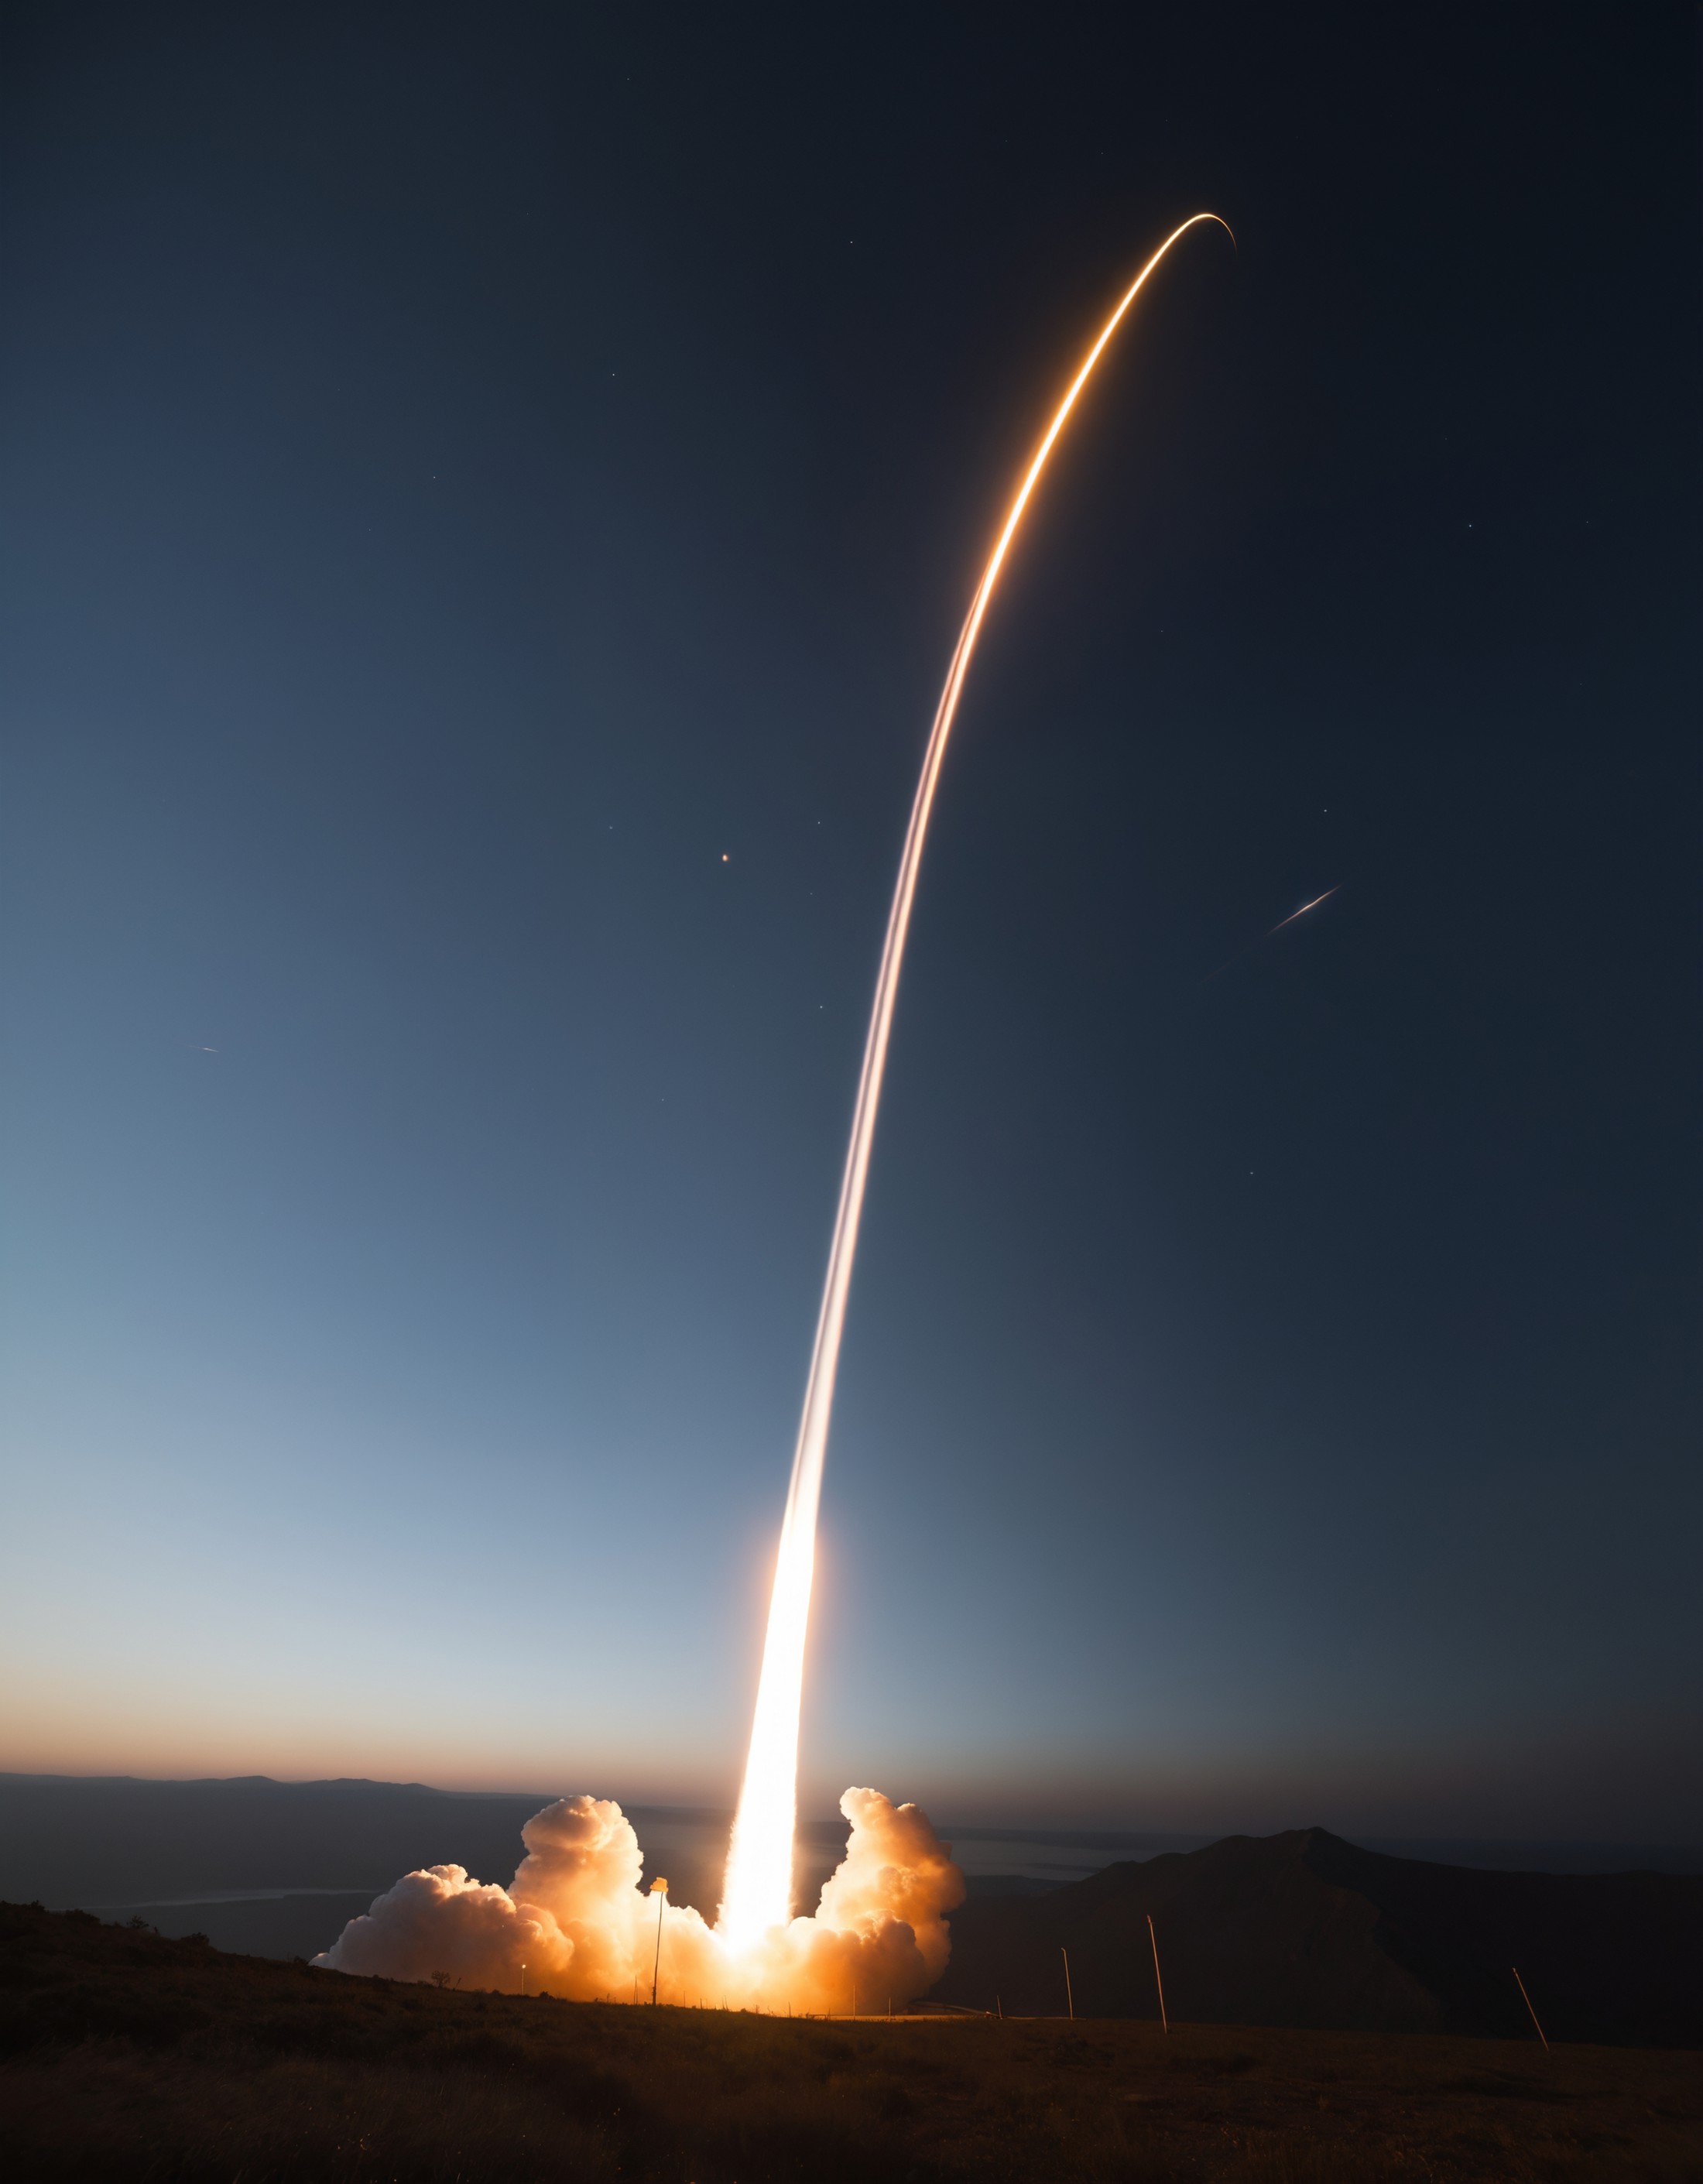 award winning photo of a rocket streaking towards the moon, zavy-lghttrl, atmospheric haze, dynamic angle, cinematic still...